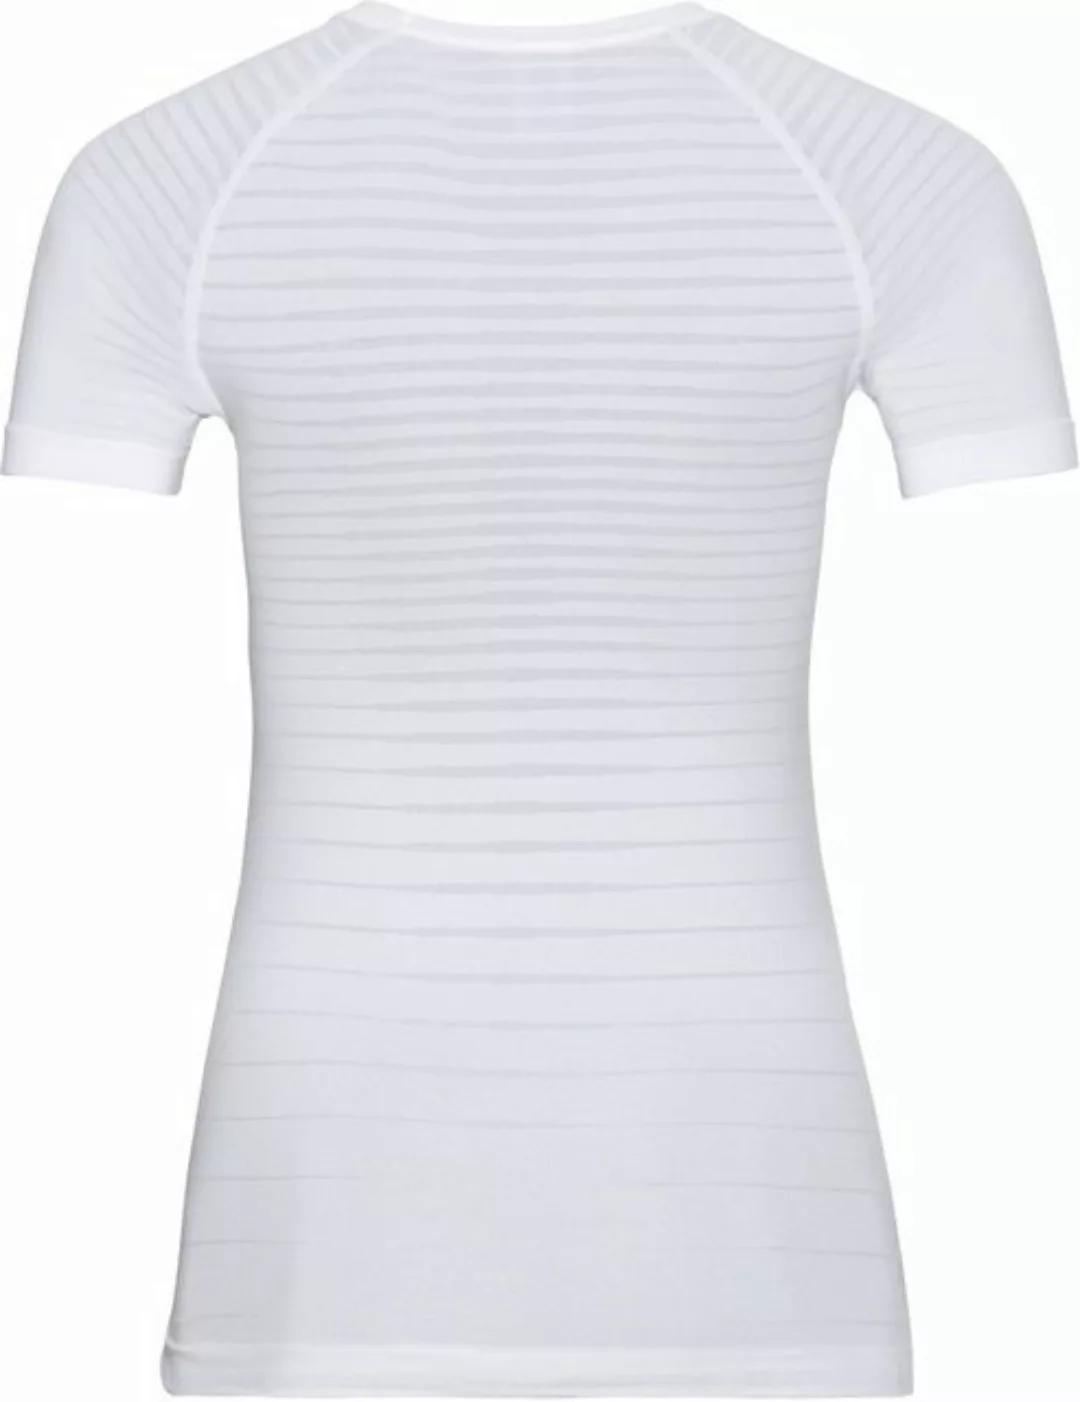 Odlo T-Shirt Performance Light günstig online kaufen